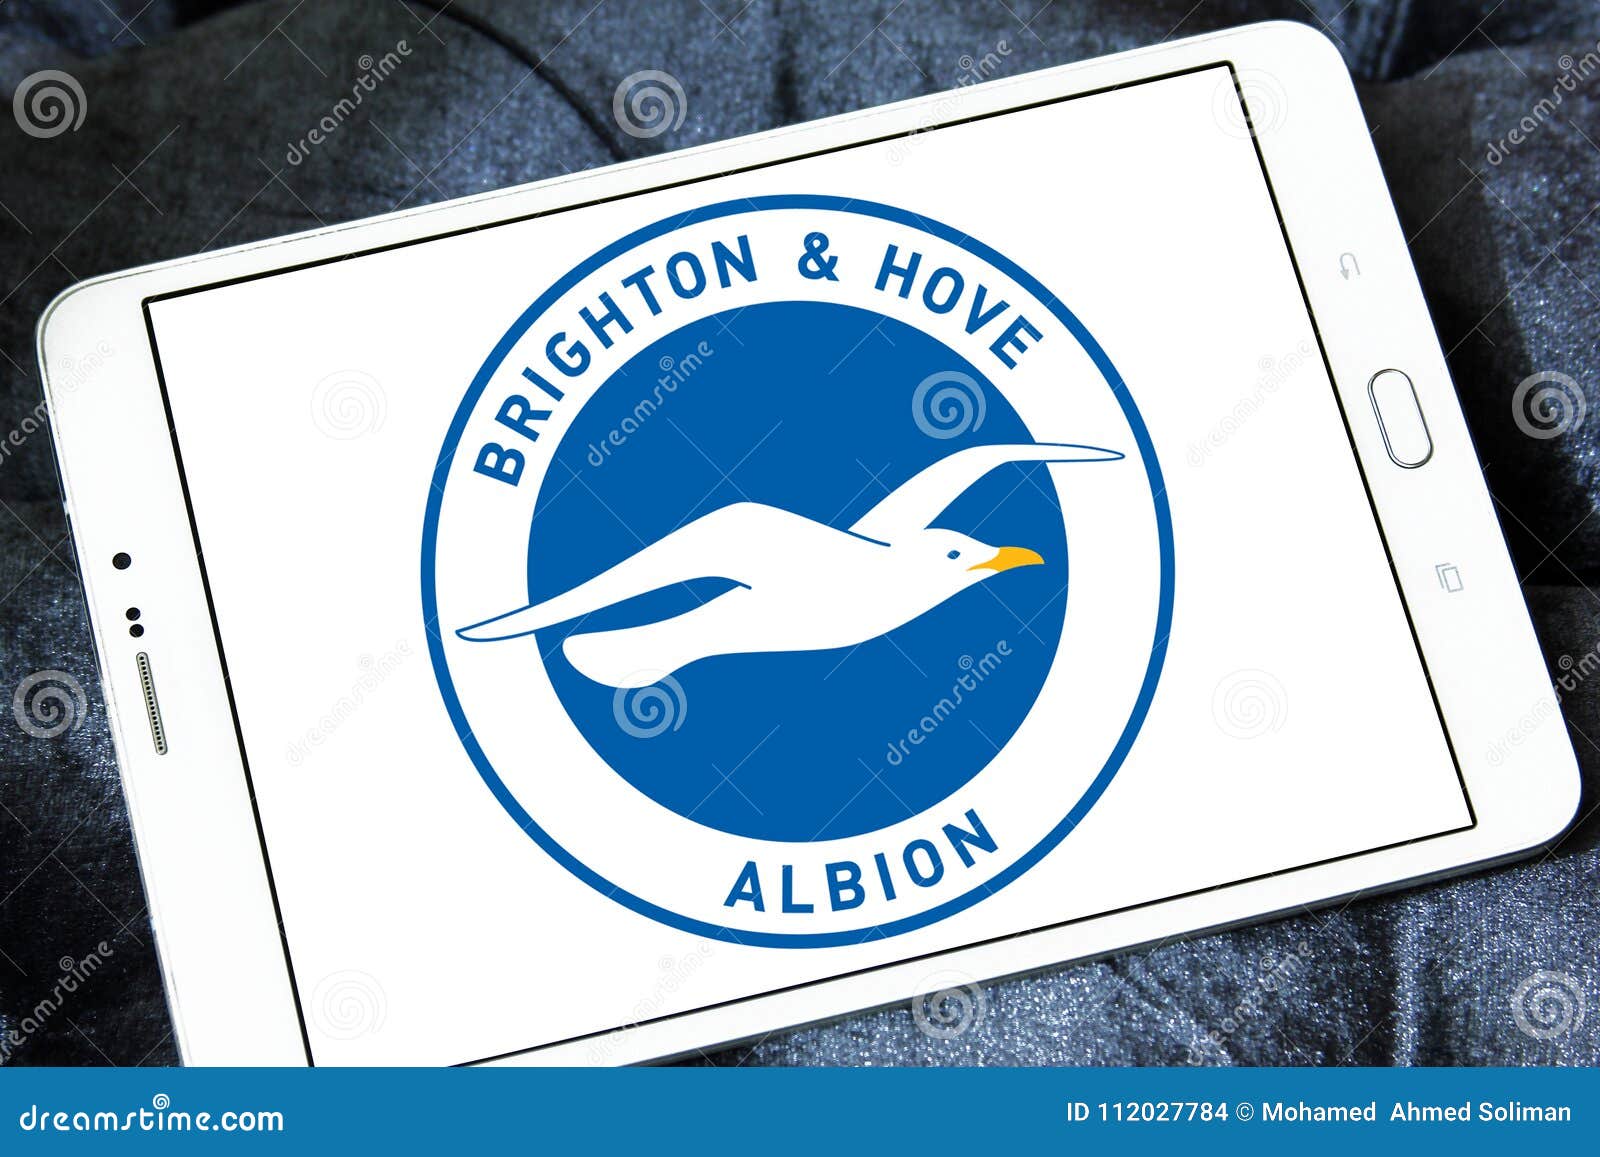 Brighton Hove Albion F C Football Club Logo Editorial Stock